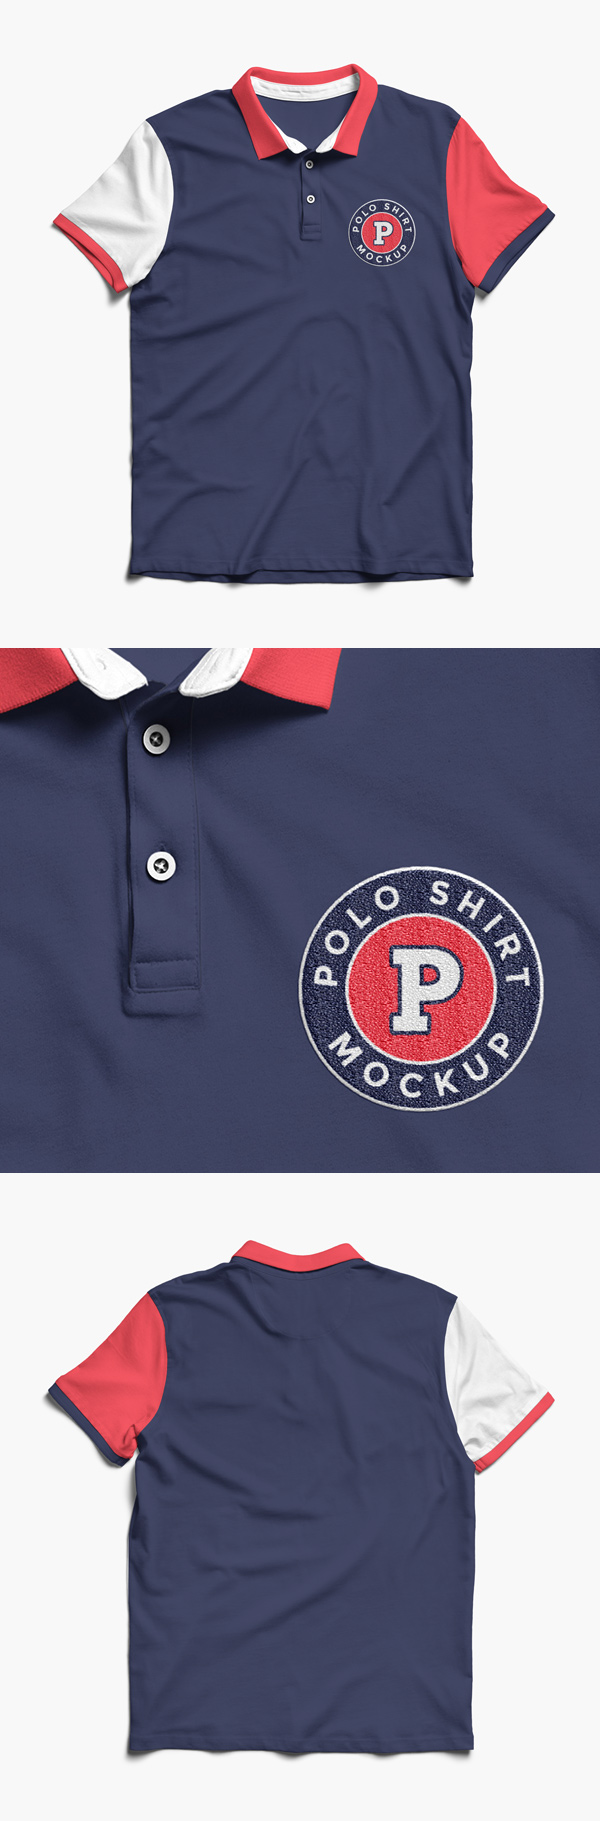 Polo Shirt MockUp PSD Template LTHEME